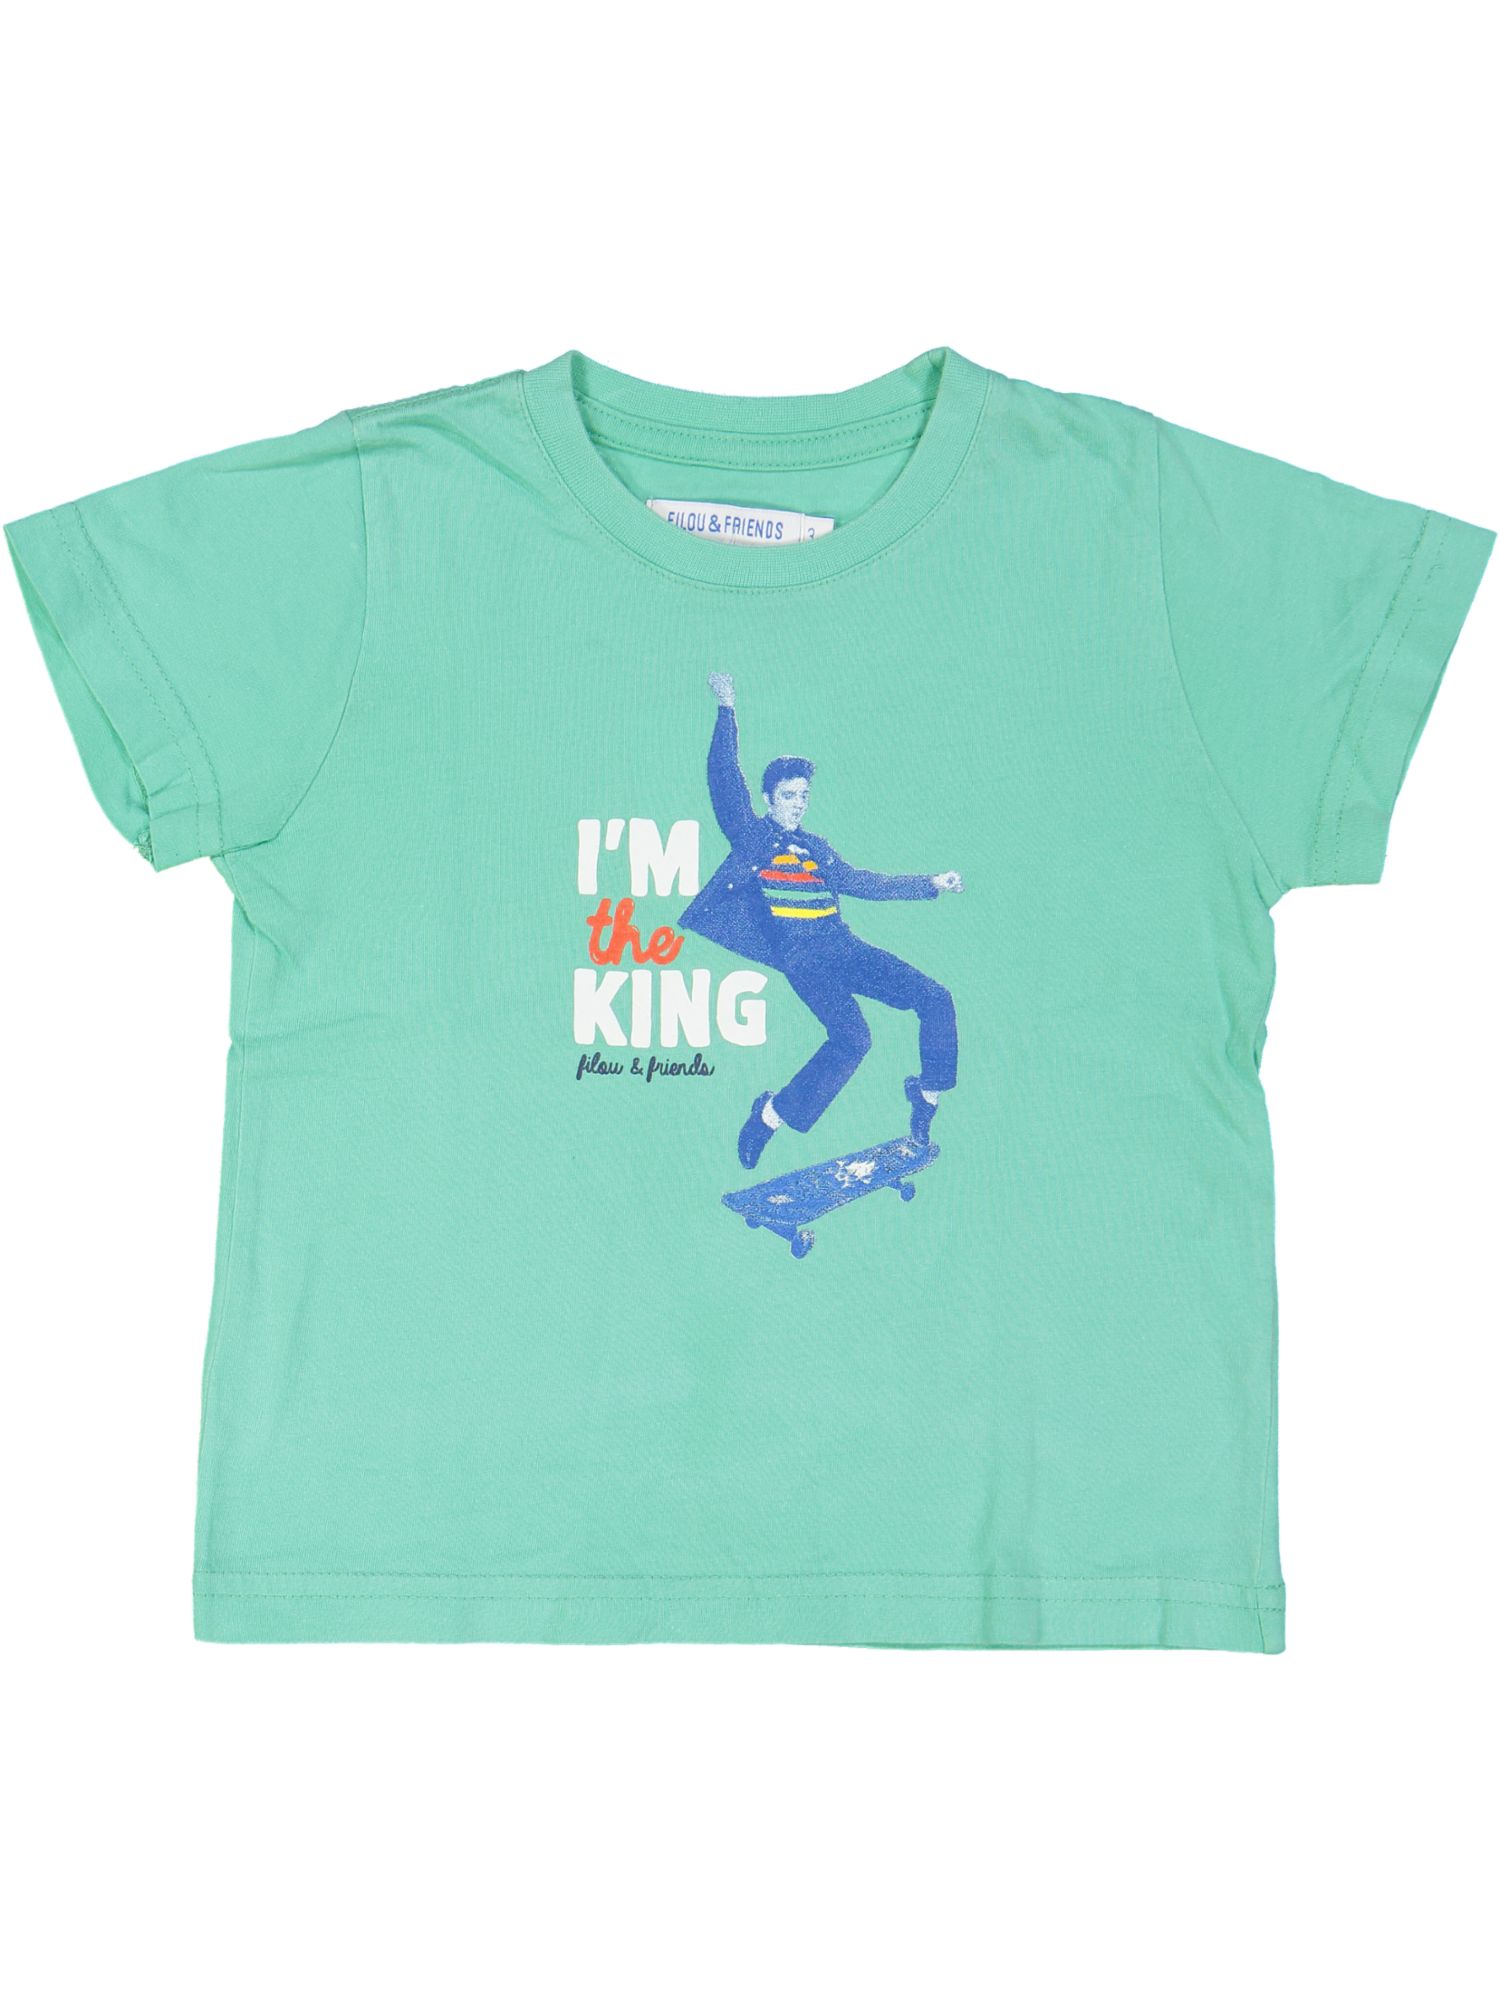 t-shirt groen i'm the king elvis 03j